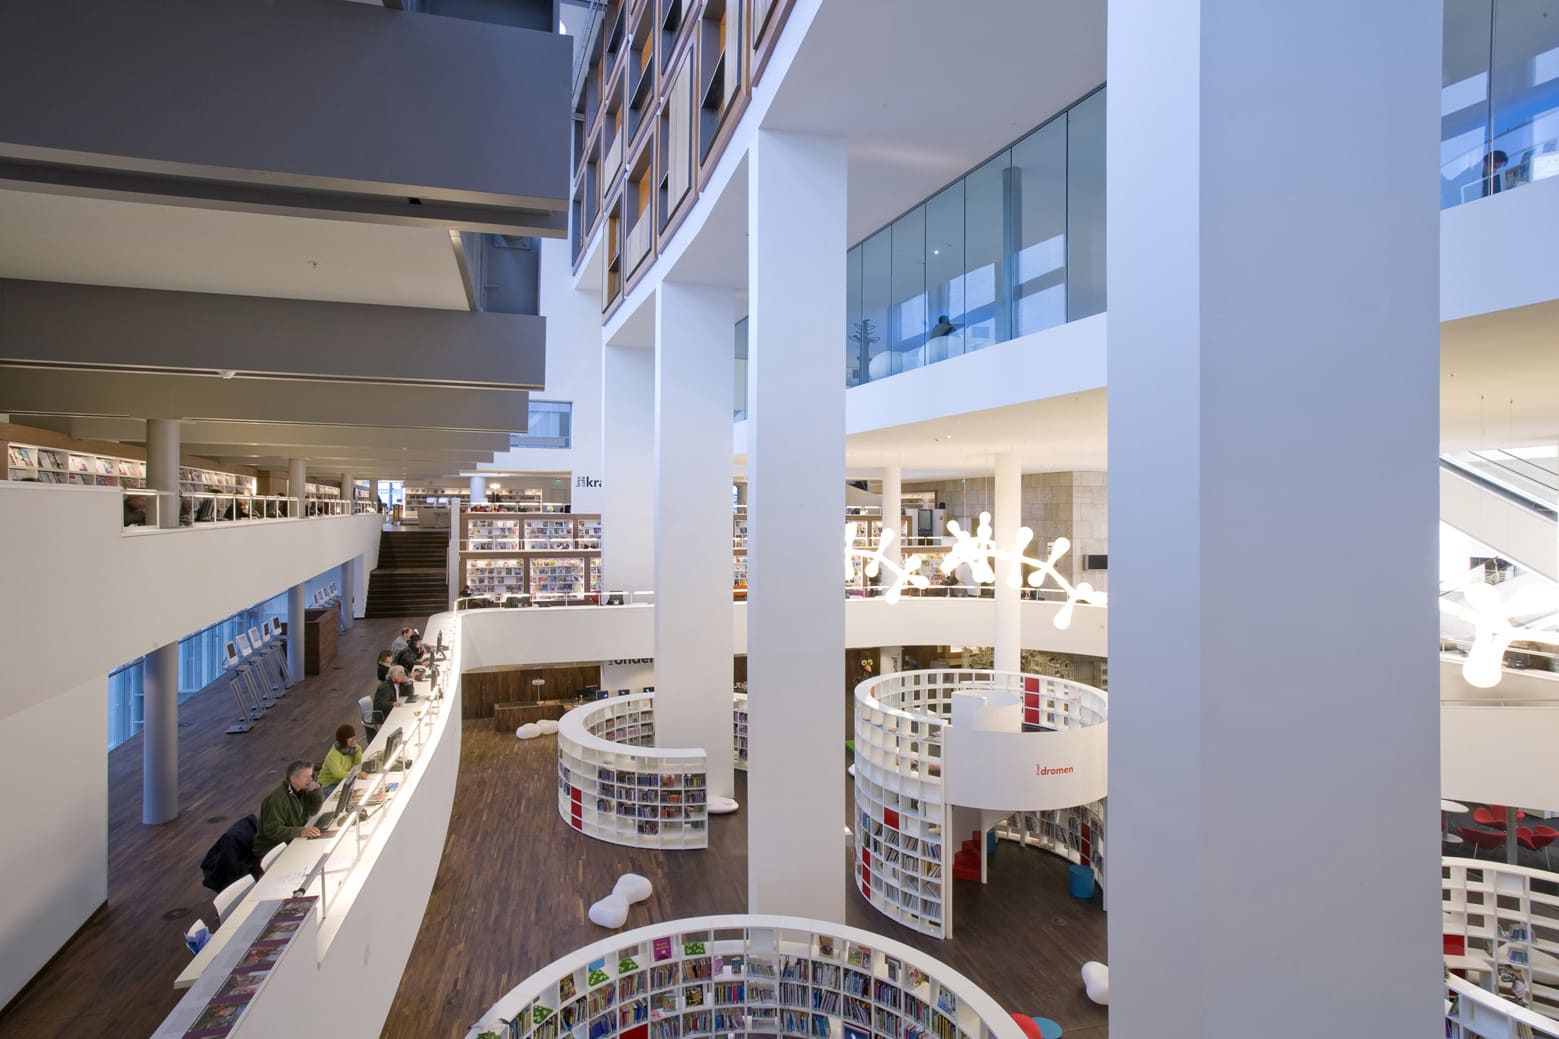 Openbare Bibliotheek – Public Library Amsterdam